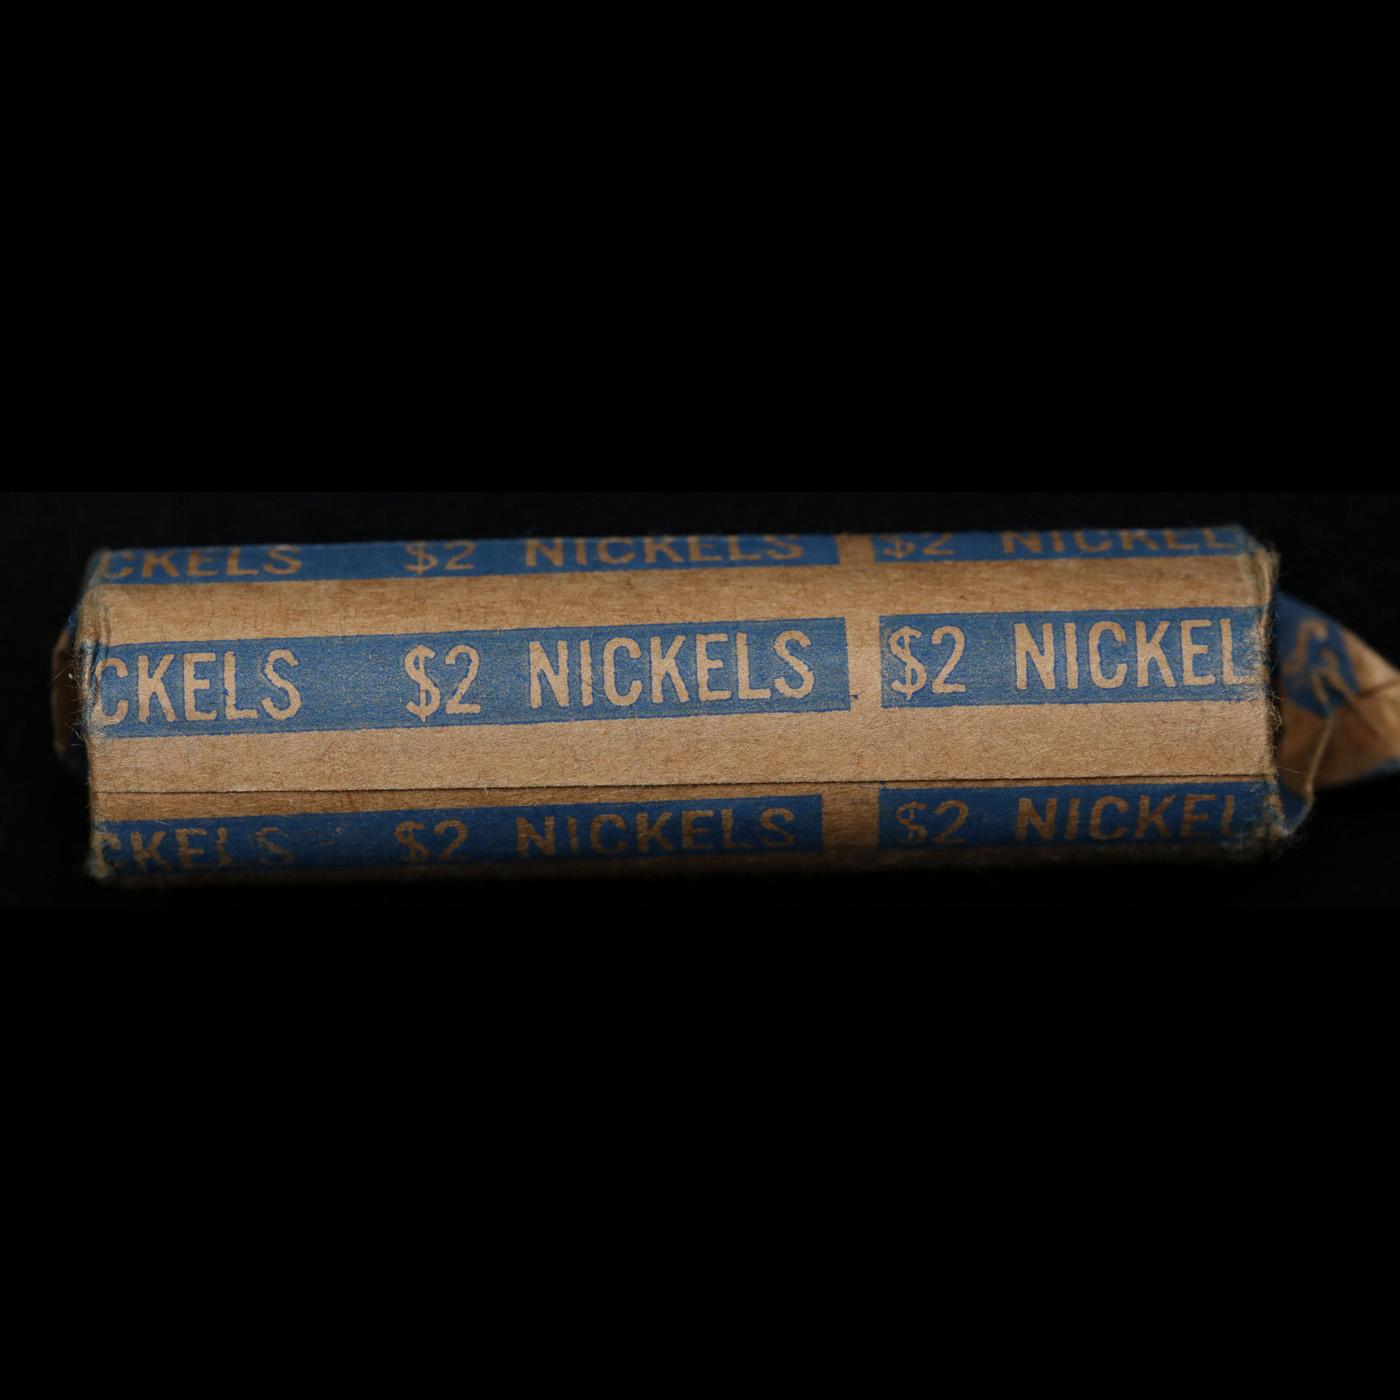 Shotgun Jefferson 5c roll, 1978-d 40 pcs Vintage Nickel Wrapper